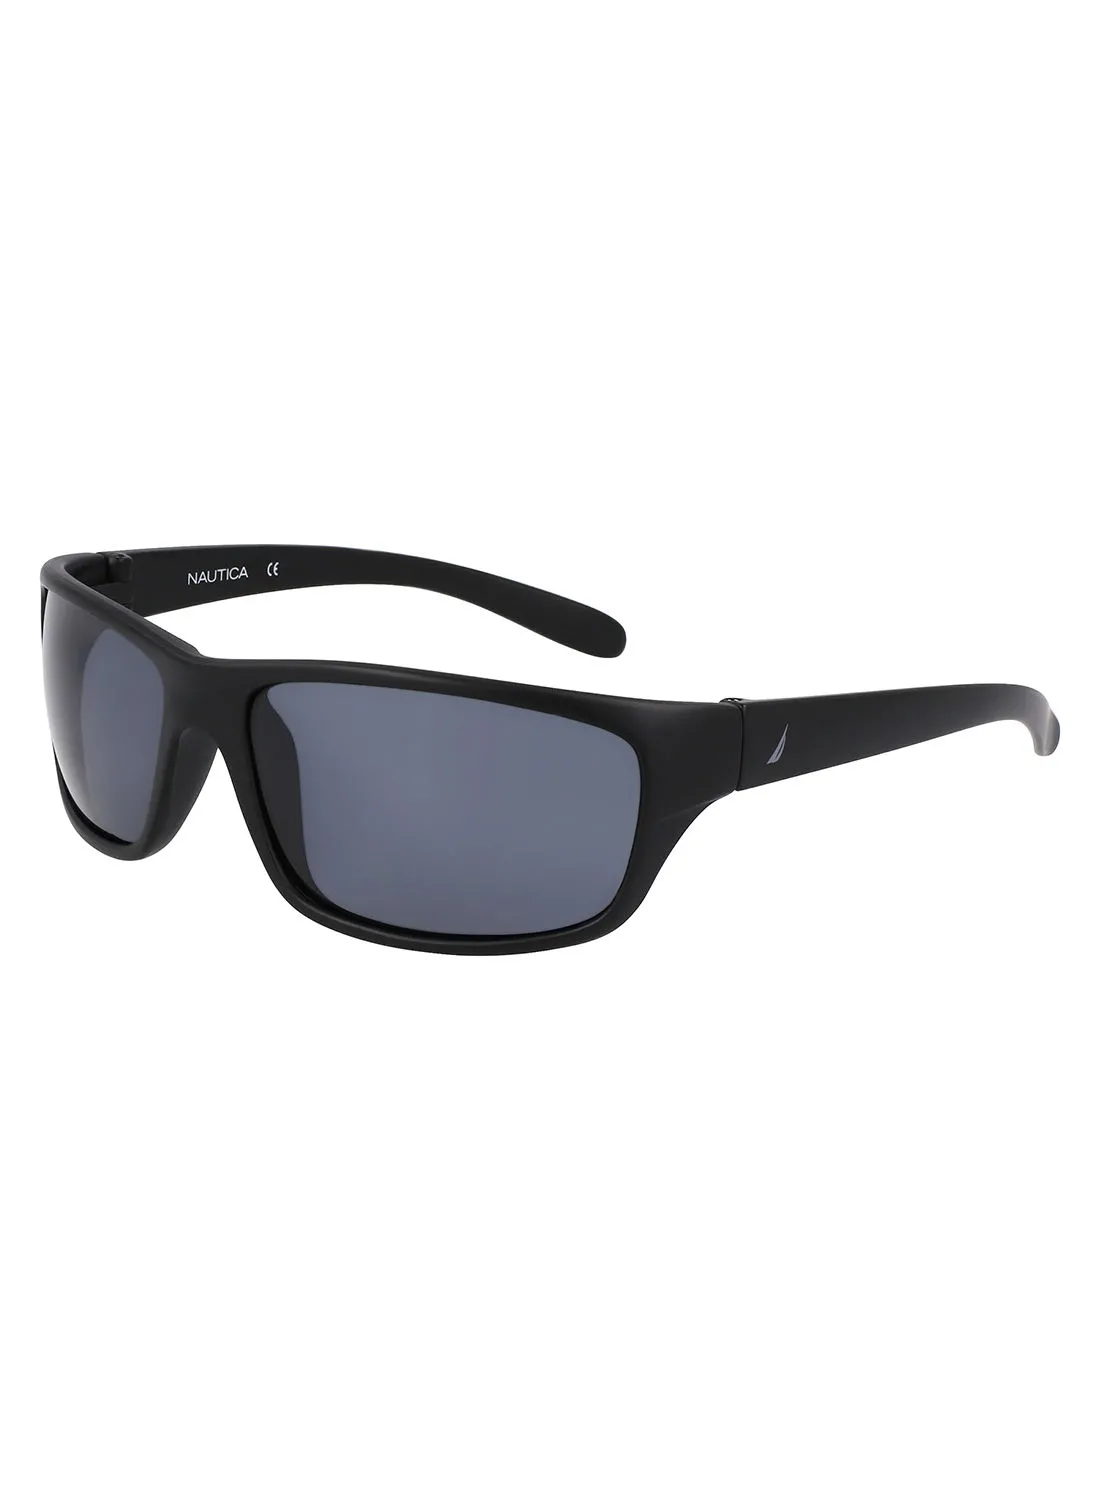 NAUTICA Men's Rectangular Sunglasses - 39240-005-6216 - Lens Size: 62 Mm